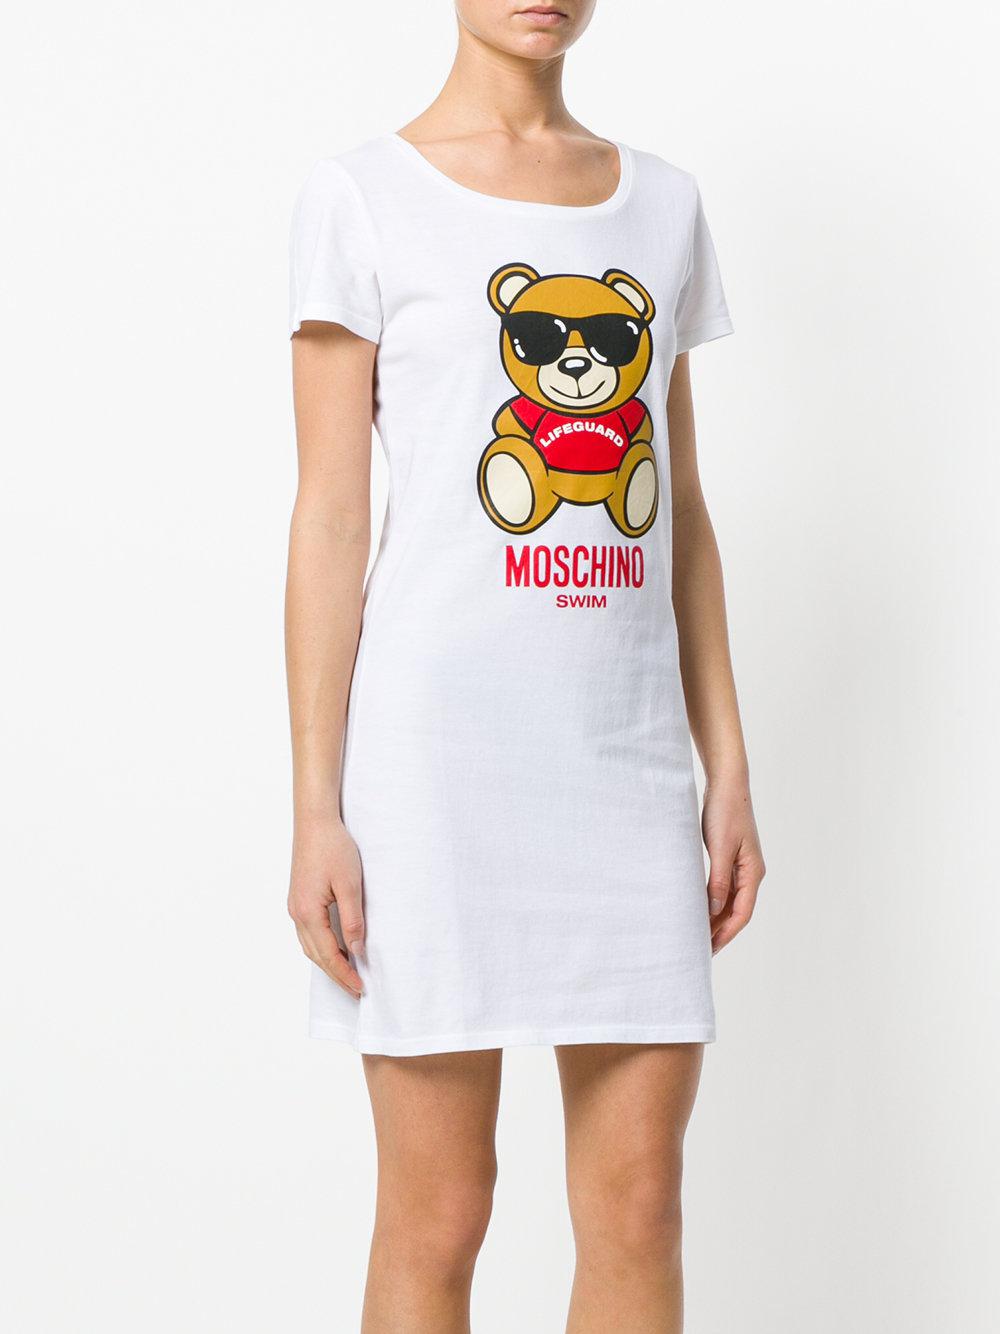 Moschino Cotton Swim T-shirt Dress in ...